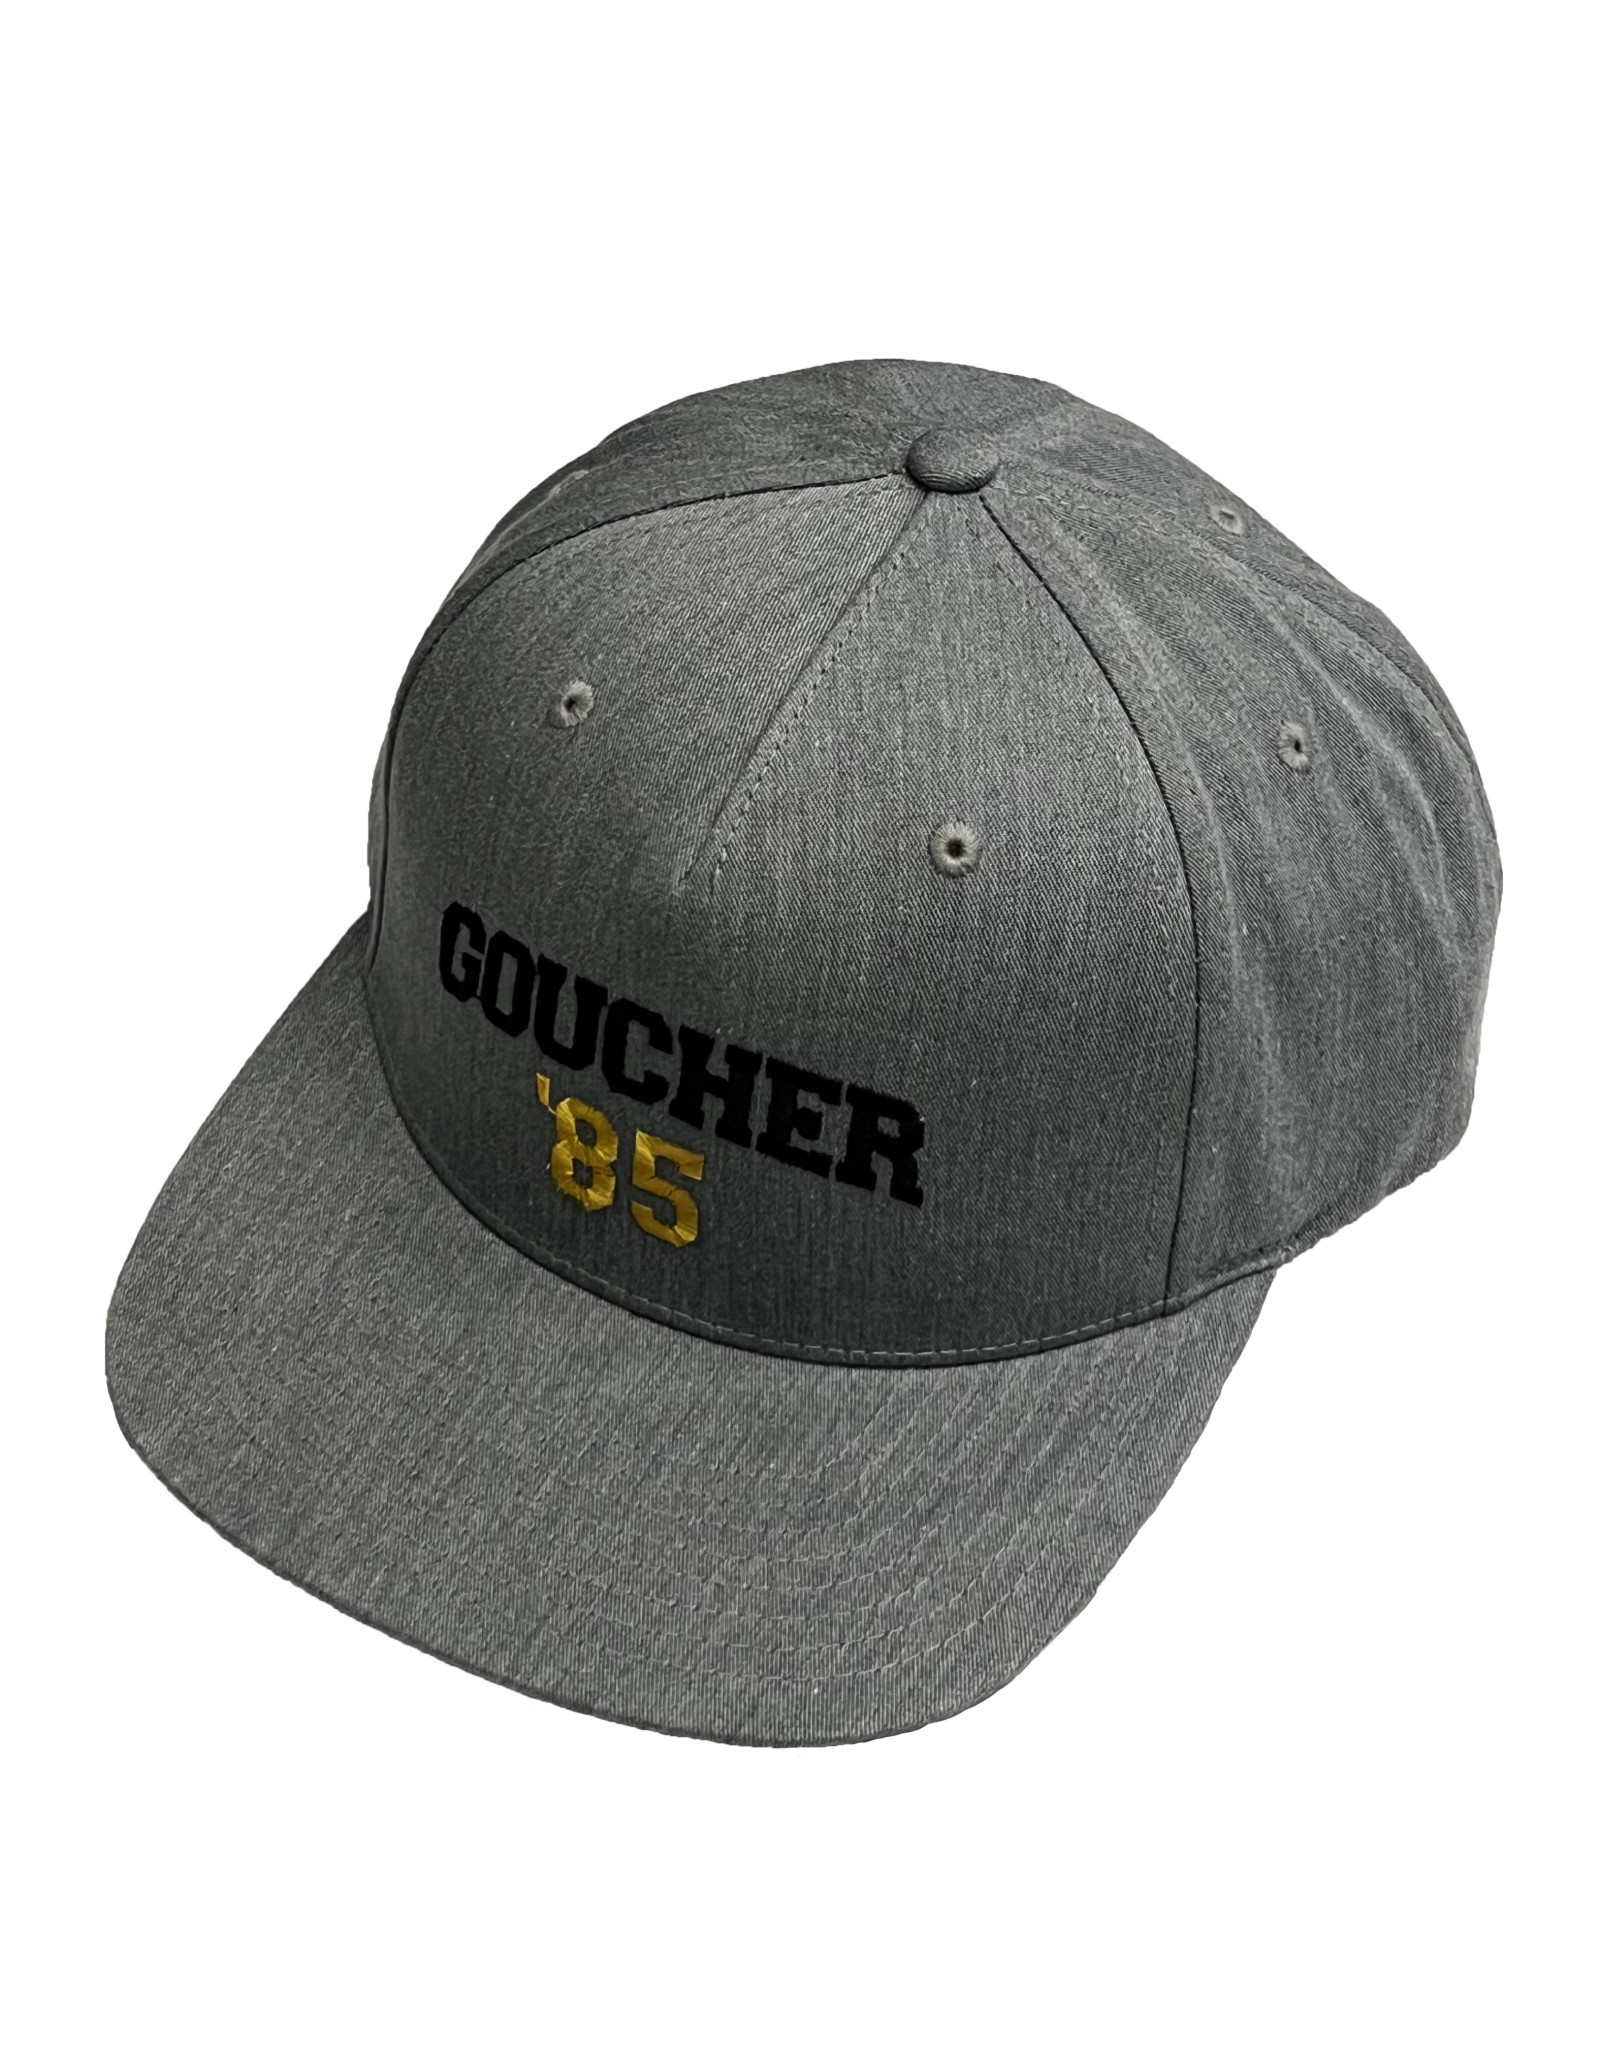 Richardson Pinch Front Snapback Cap "Goucher '85"